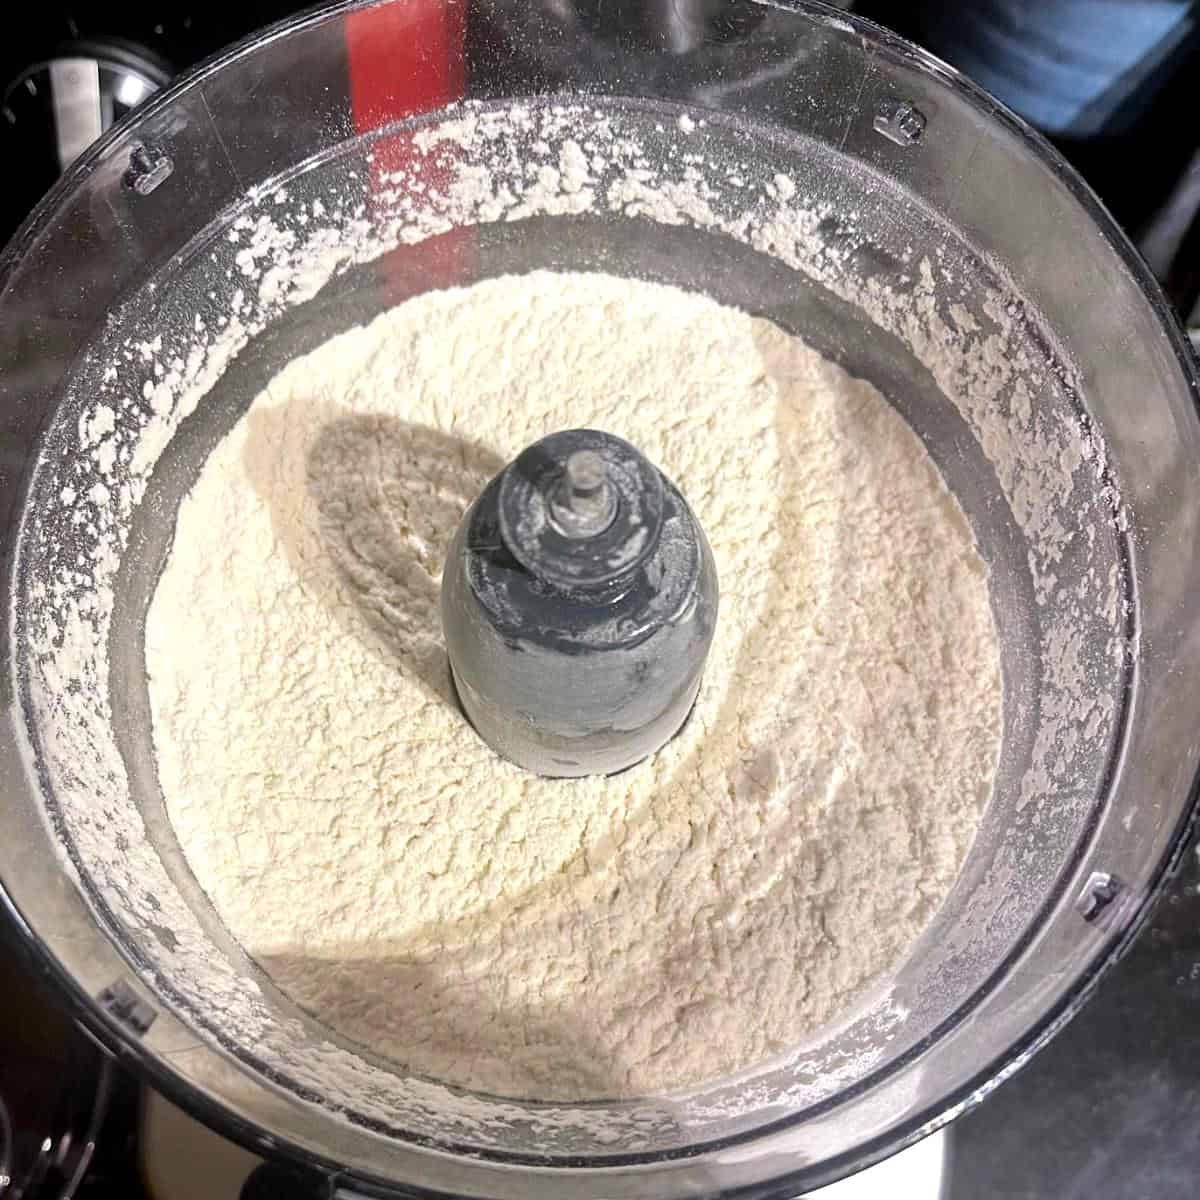 Dry ingredients for vegan empanada dough mixed in food processor.